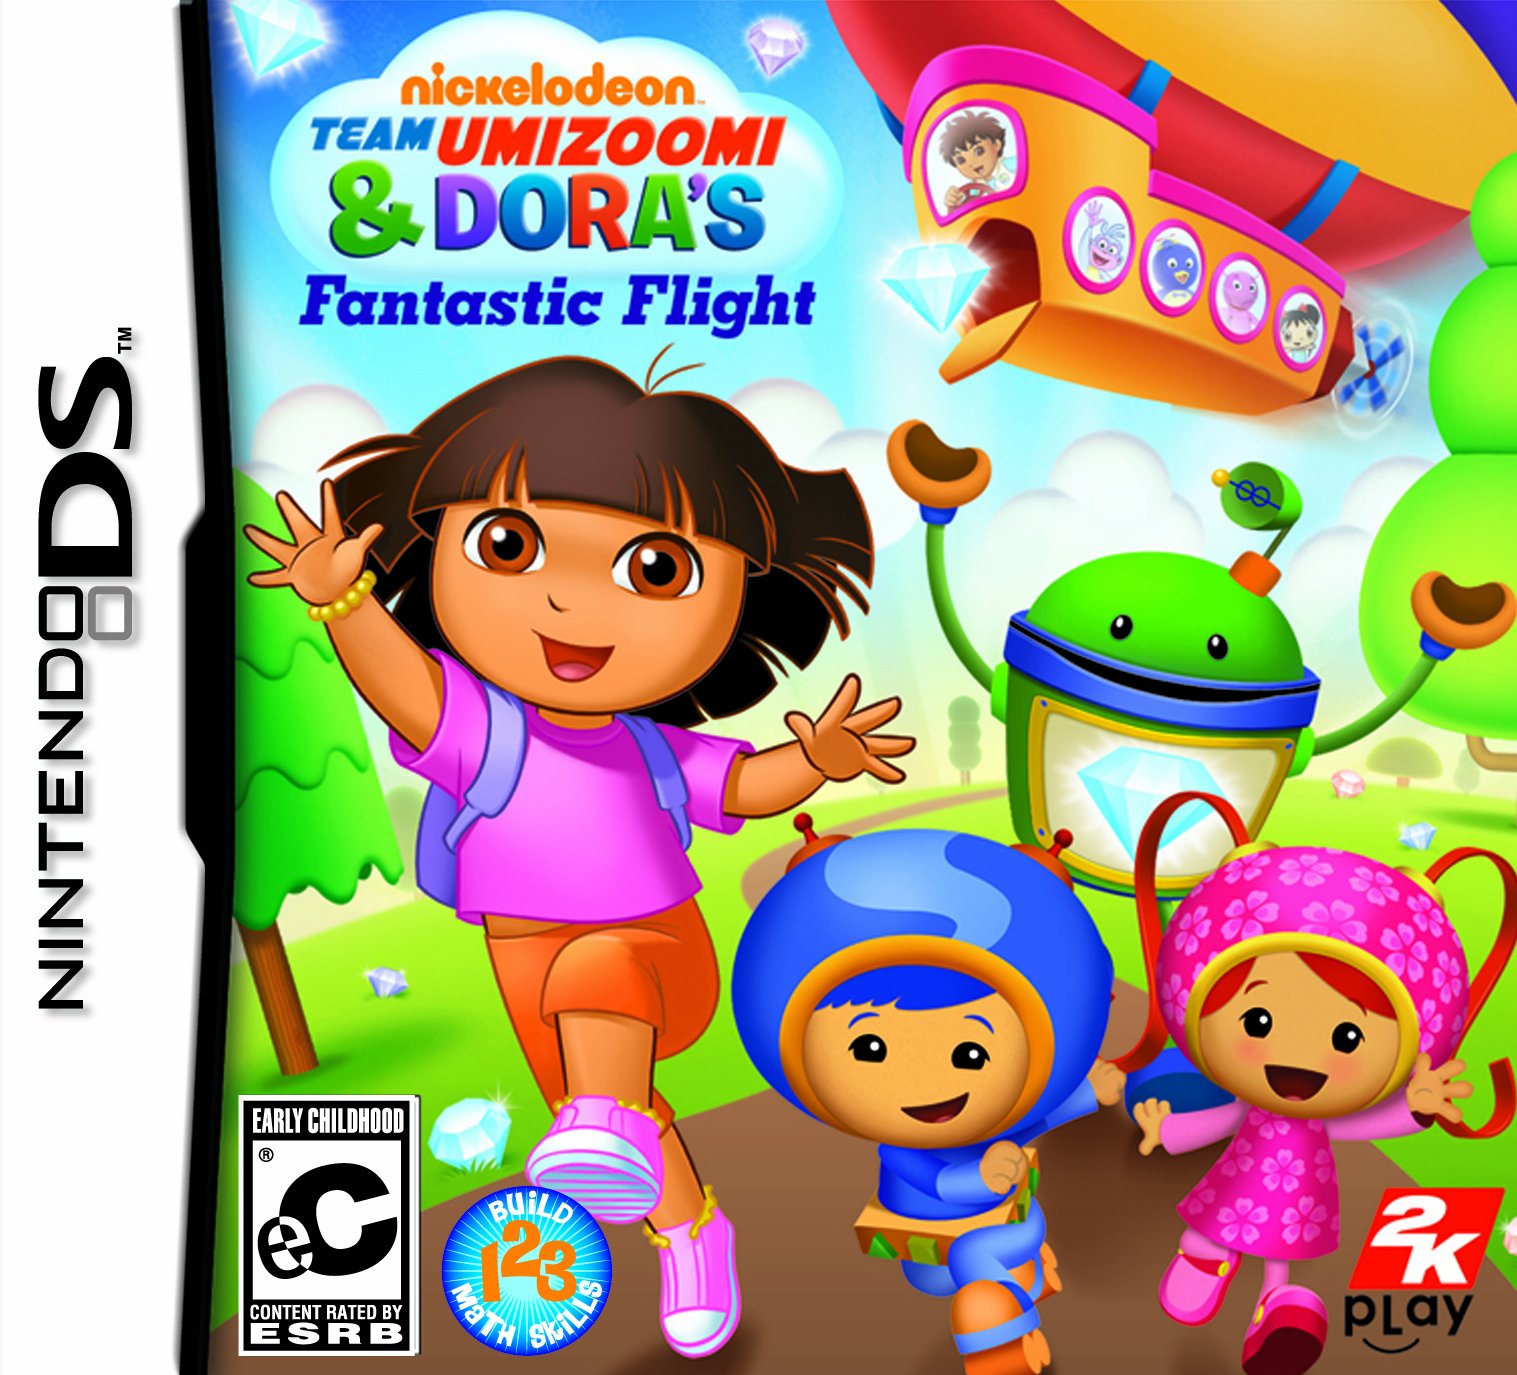 Nickelodeon Team Umizoomi & Doras Fantastic Flight Boxart - High resolution